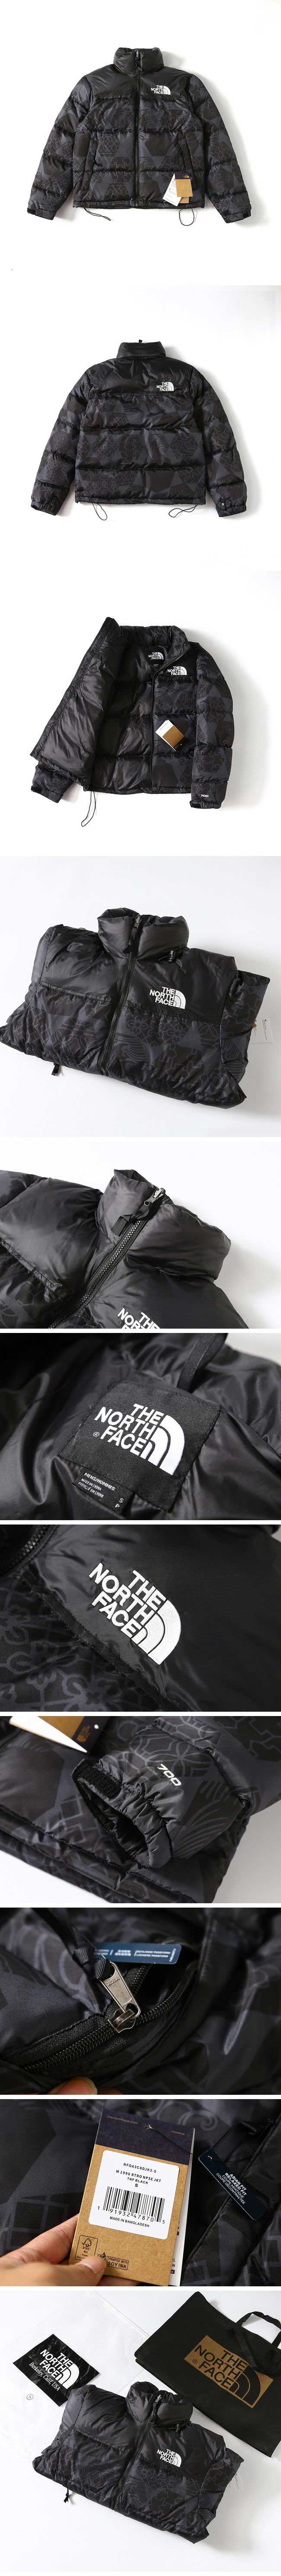 The North Face Black Printed 1996 Retro Nuptse 700 Down Jacket ザノースフェイス ブラック プリント 1996 レトロ ヌプシ 700 ダウン ジャケット